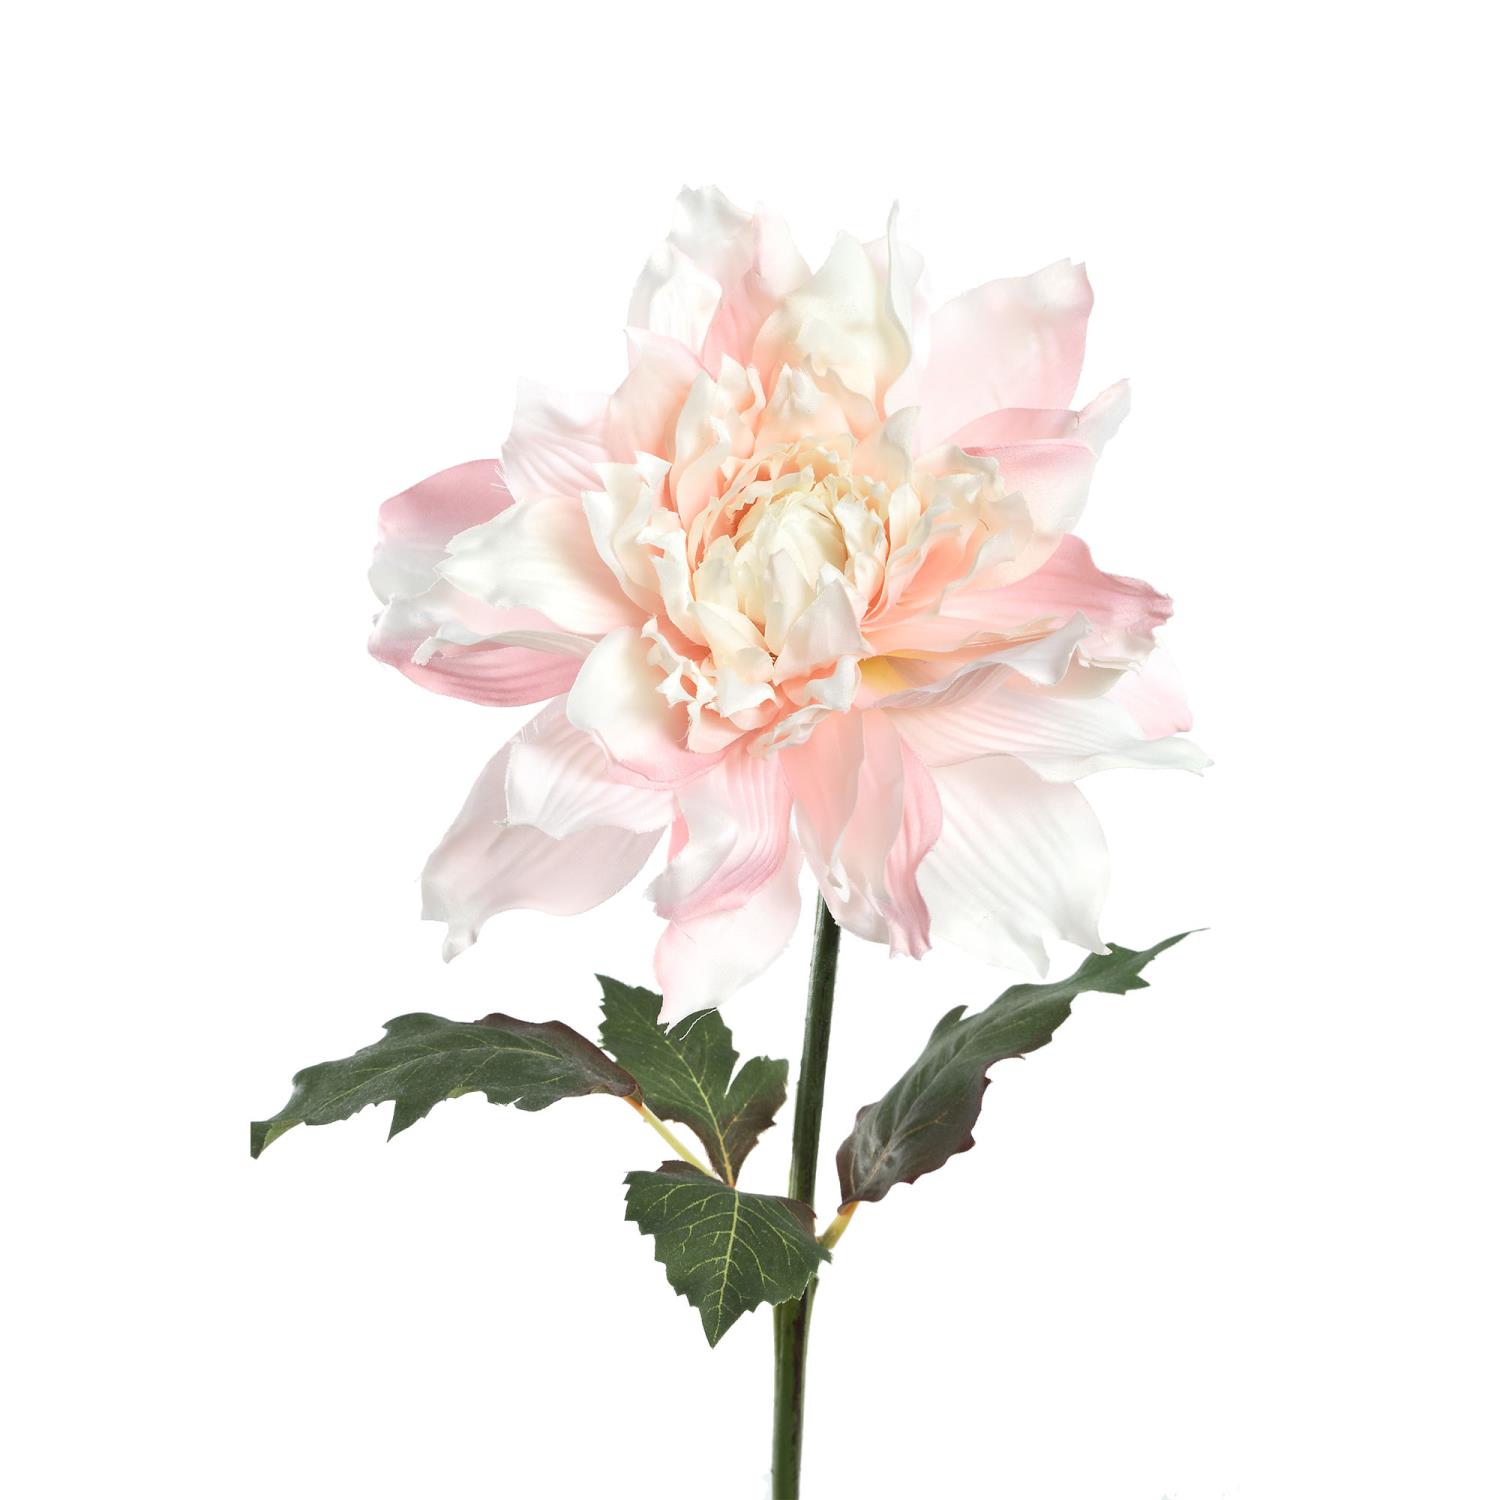 Rose Flower pink white spray 708518